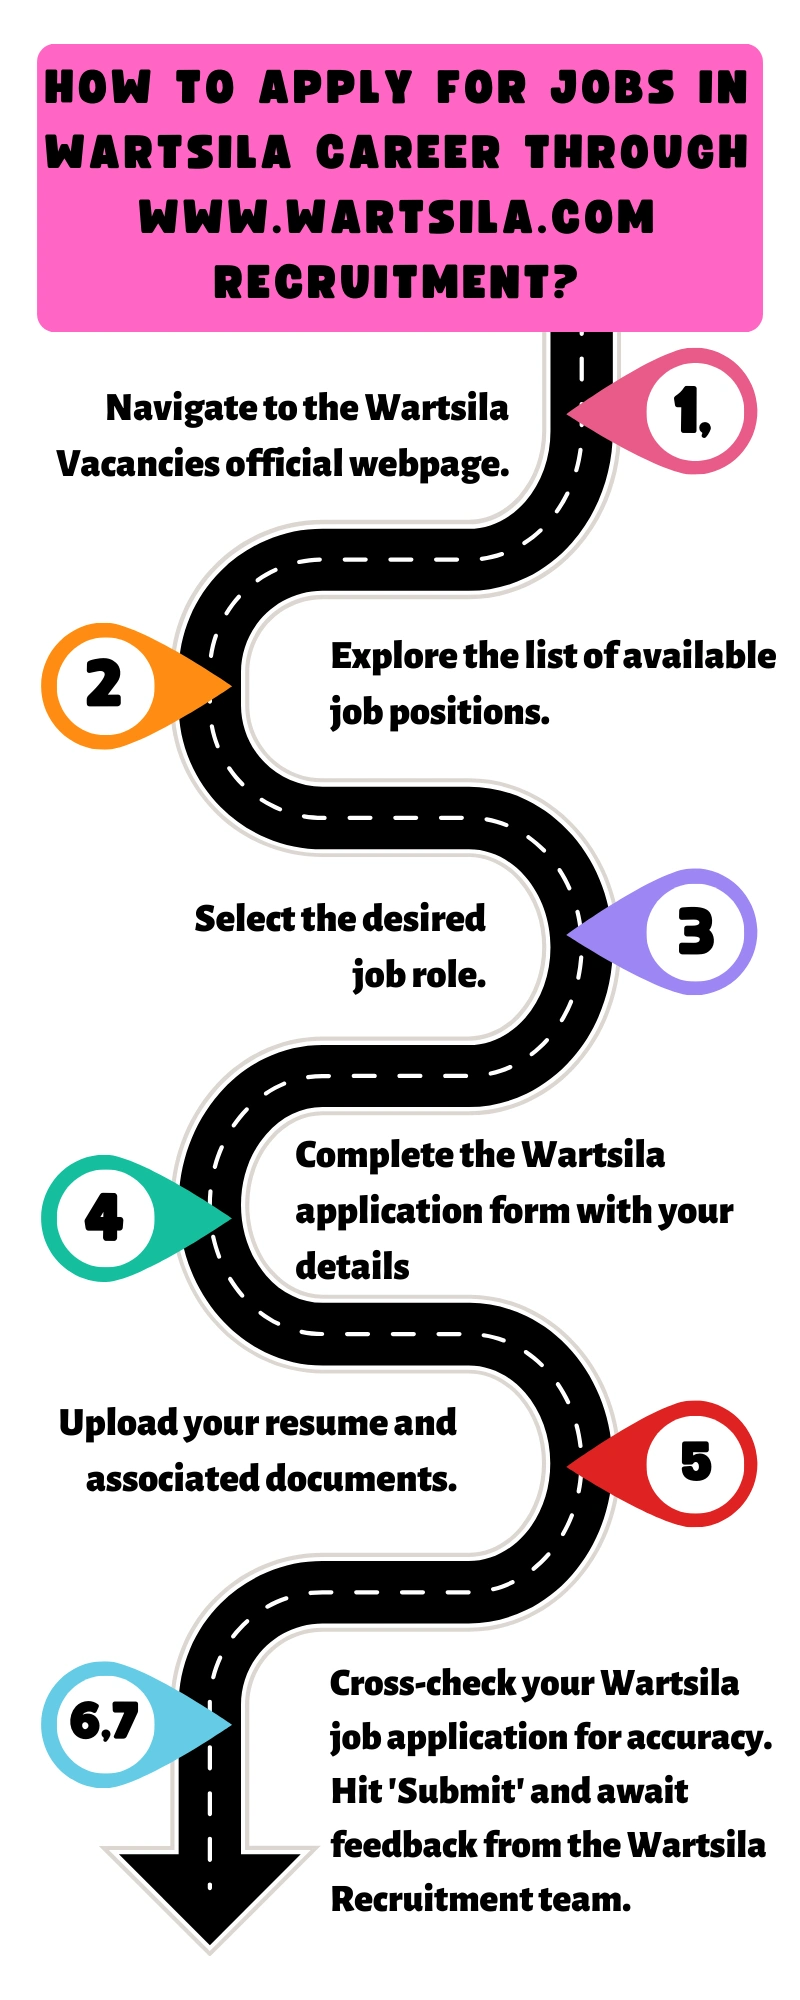 How to Apply for Jobs in Wartsila Career through www.wartsila.com recruitment?